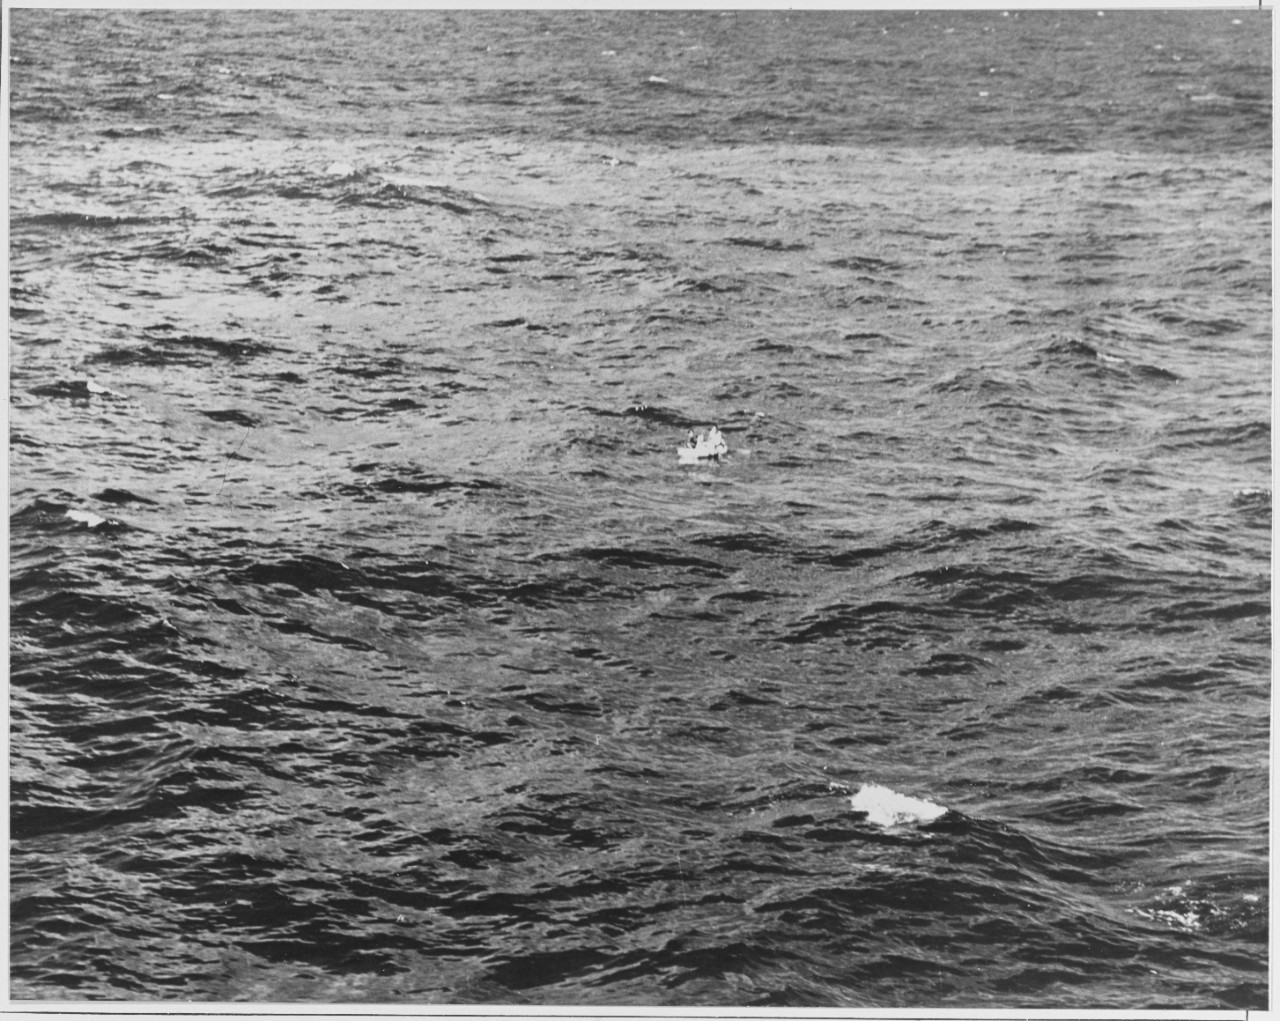 Survivors on a raft from sunk German Submarine U-156